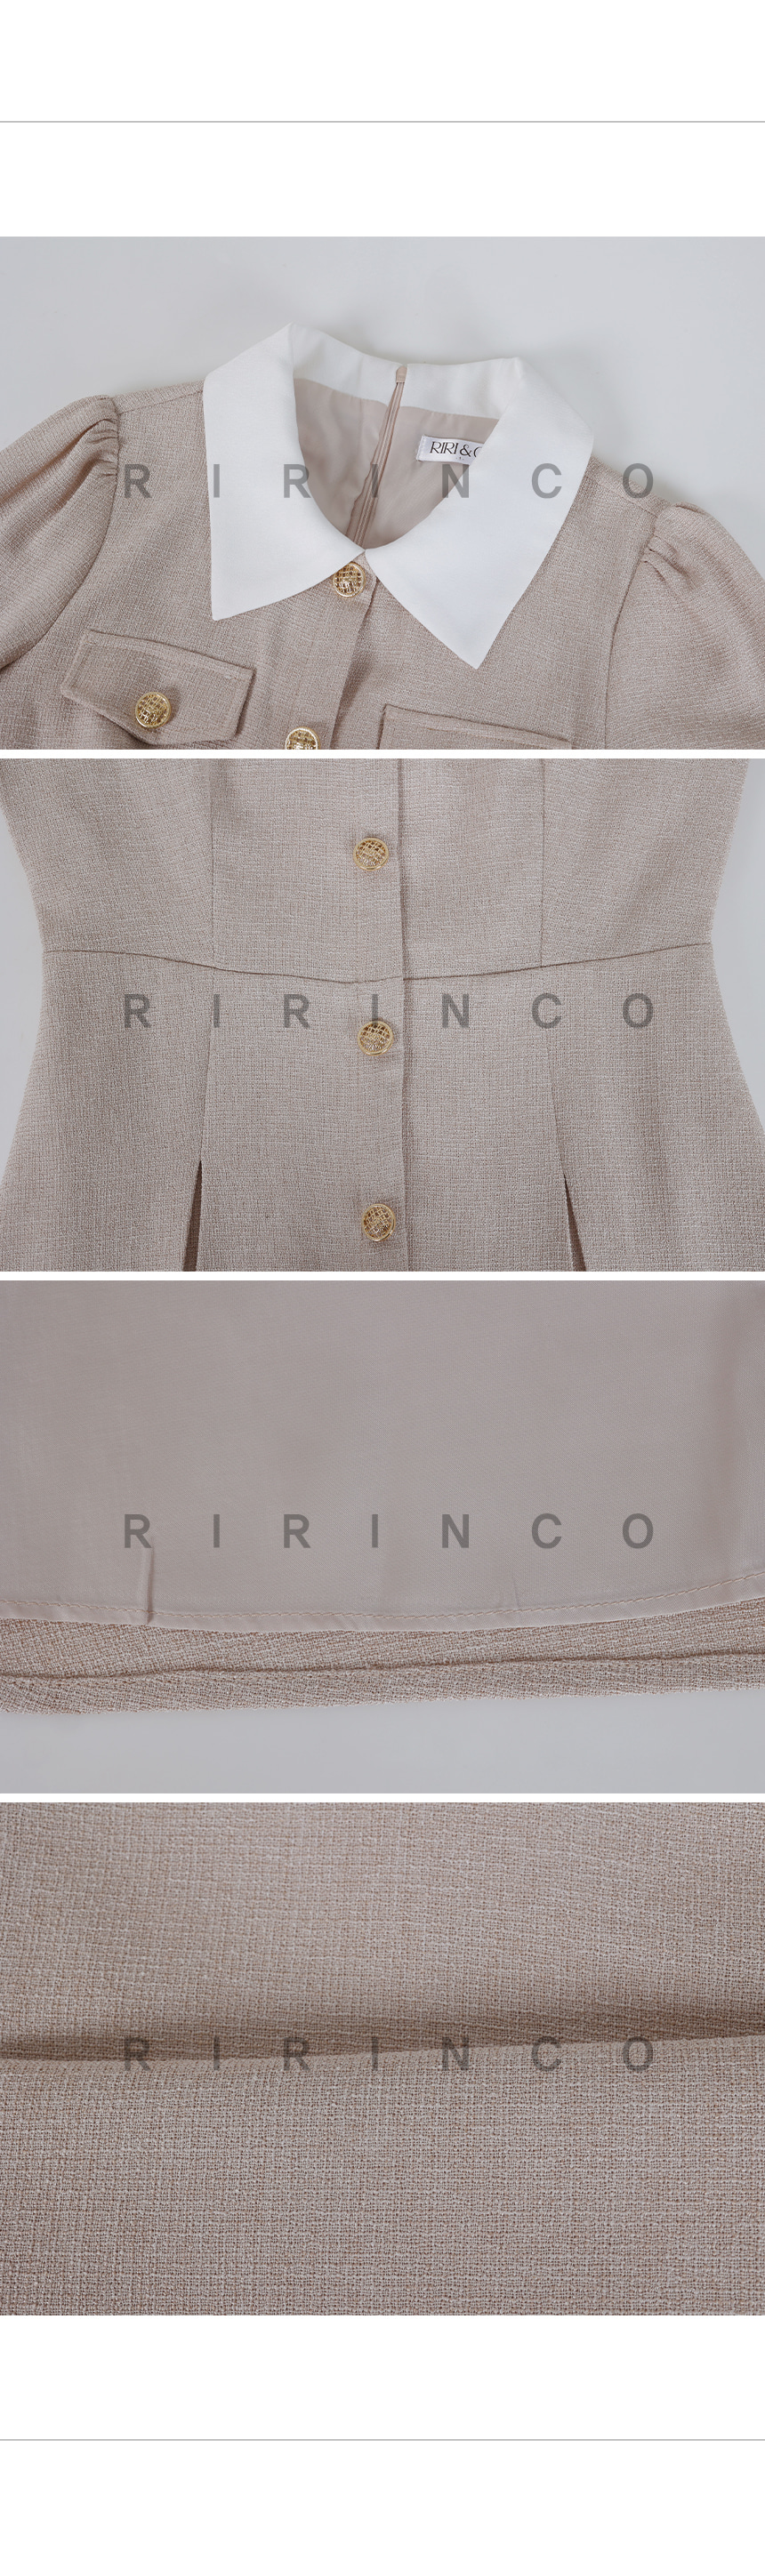 RIRINCO 配色ツイードロングワンピース